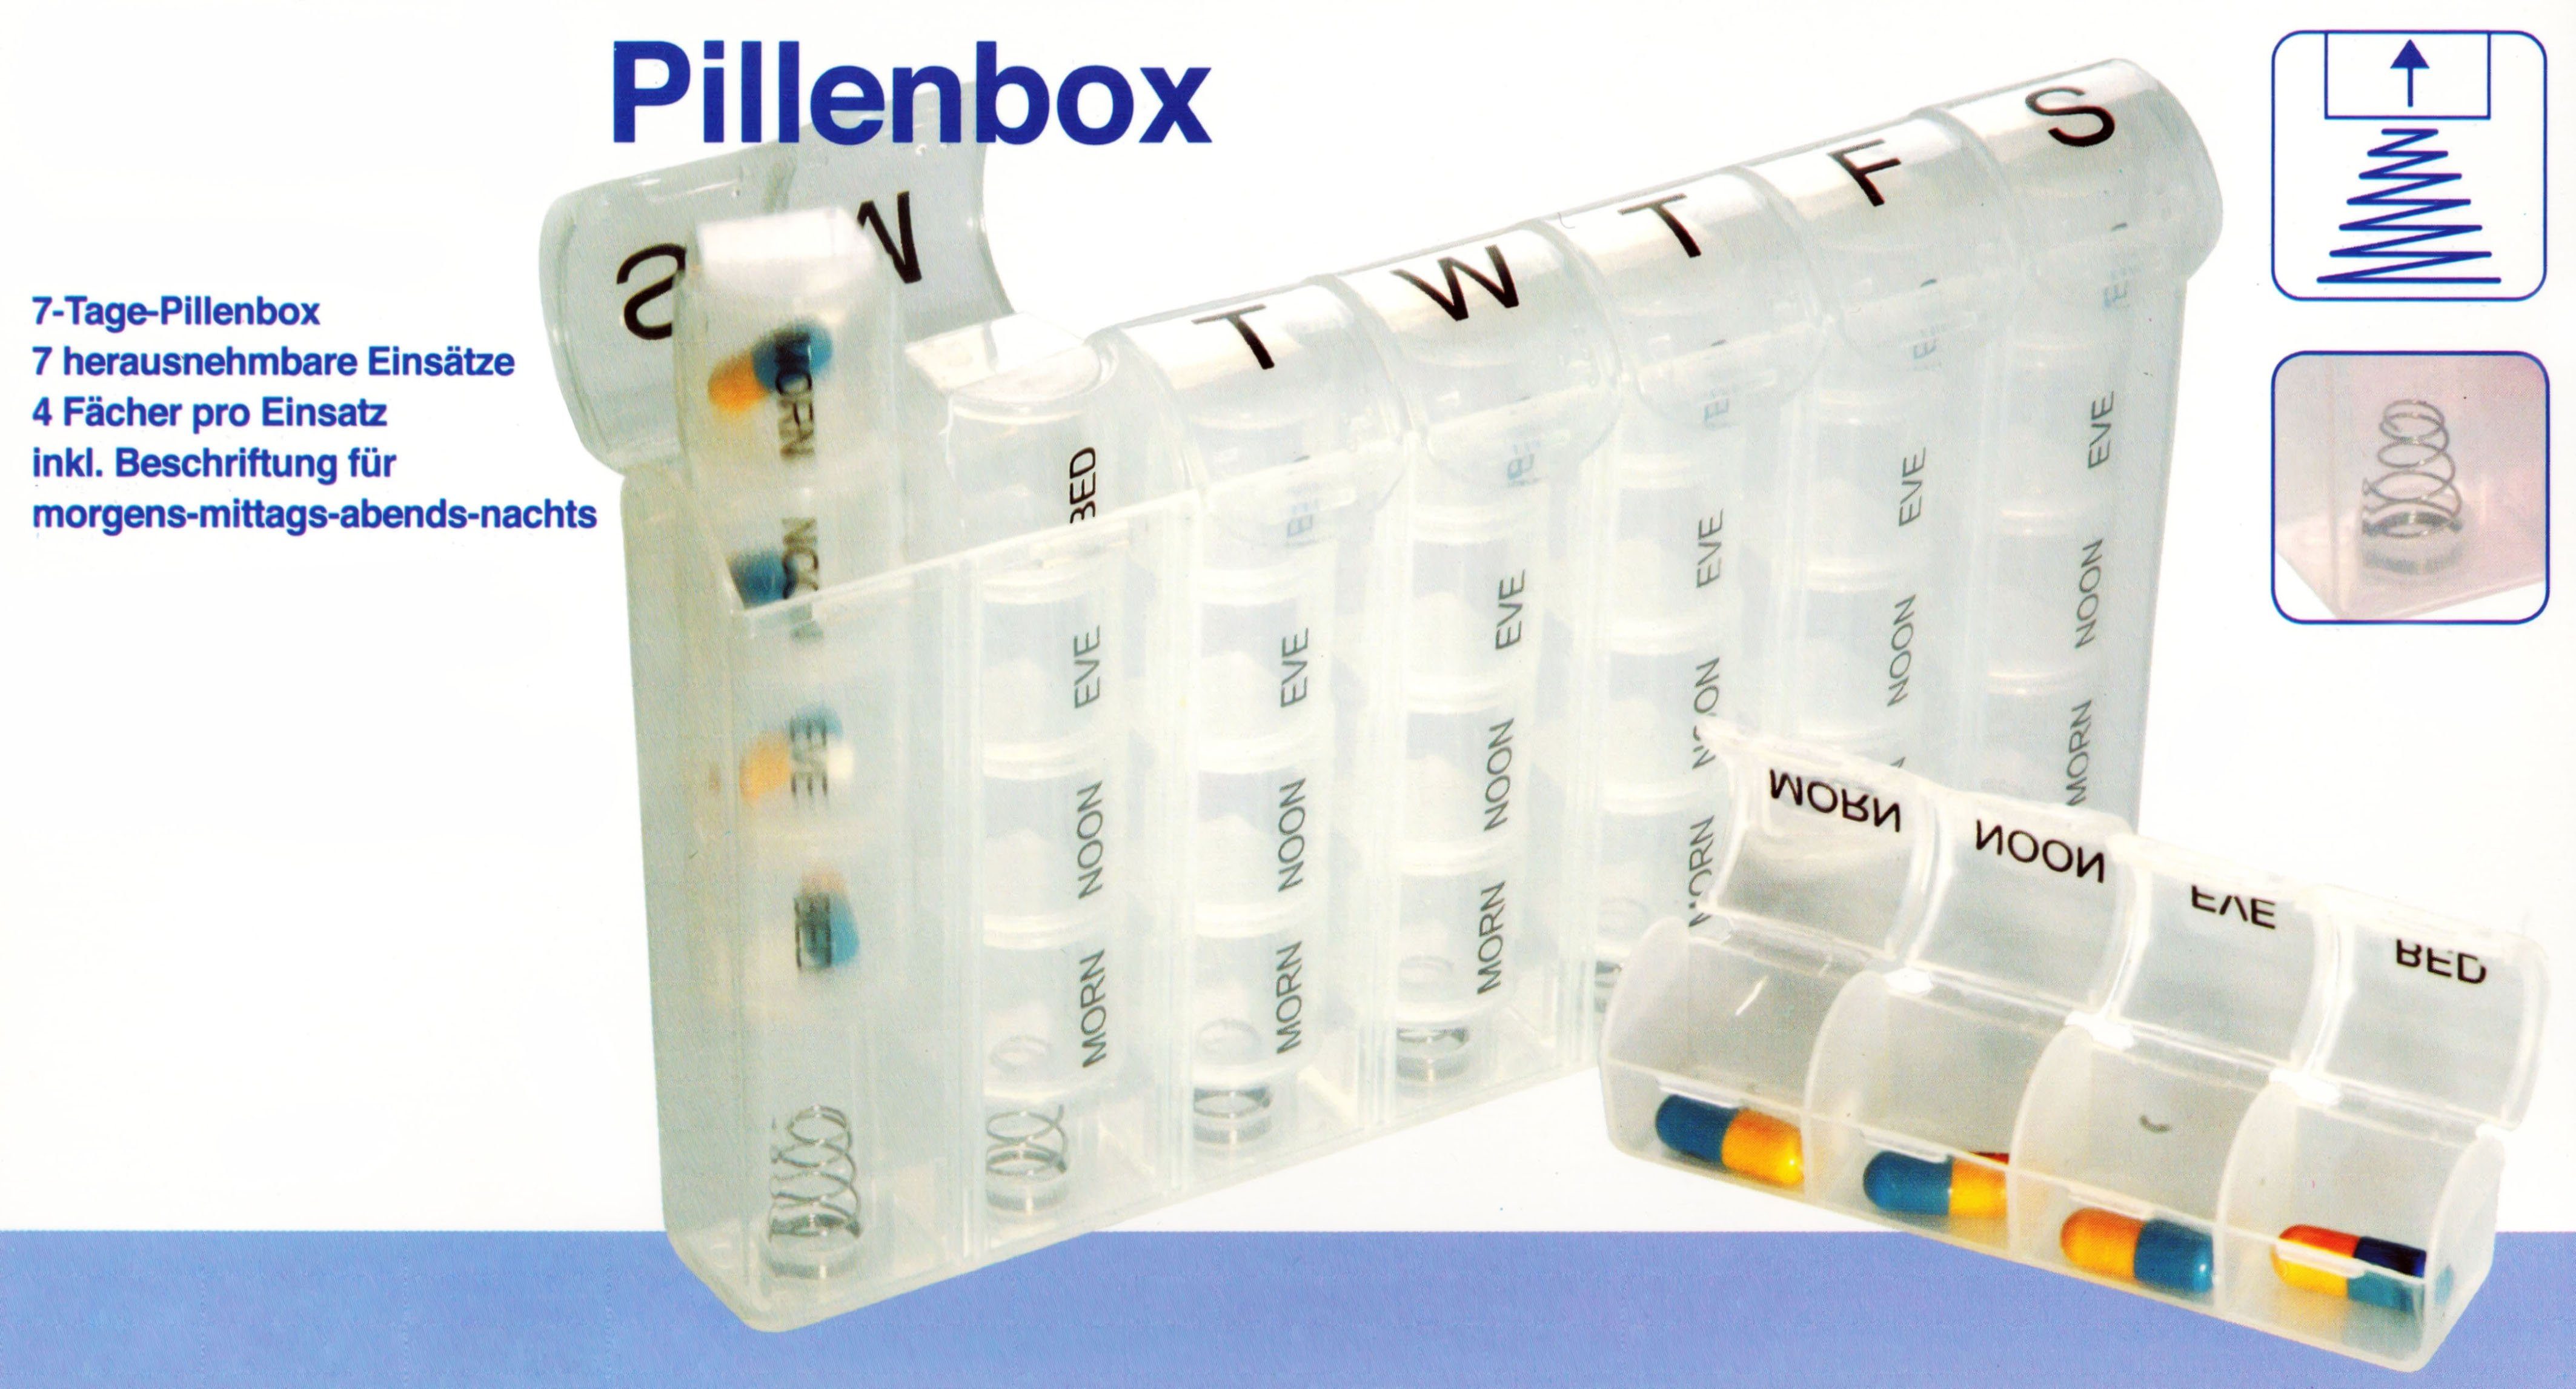 COMFORT AID Pillendose 7 Tage PILLENBOX Pillendose Tablettenbox  Medikamentenbox Pillen Dose Box 95 (Weiss)